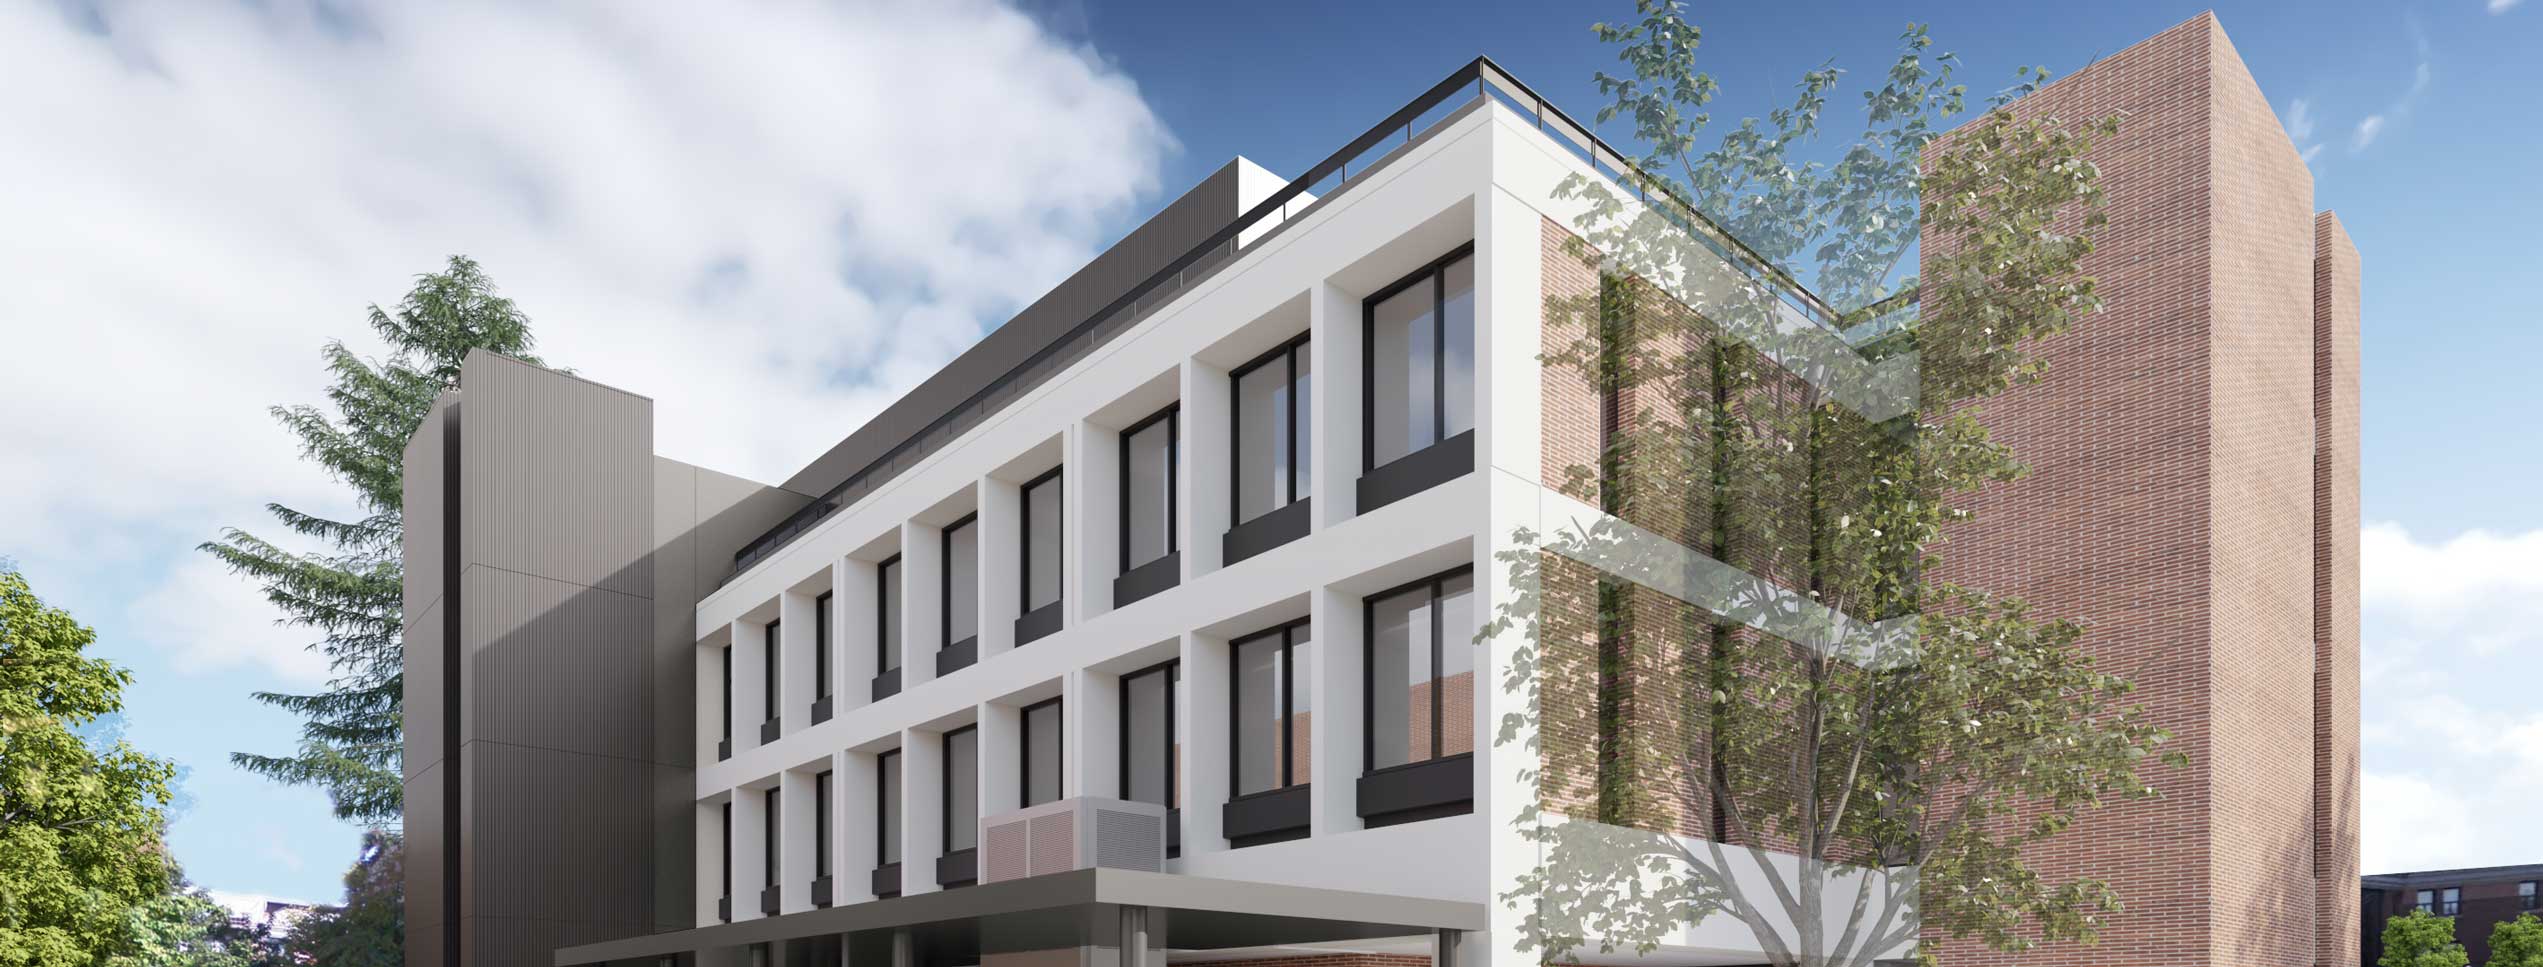 University of Oregon Huestis Hall renovation project rendering